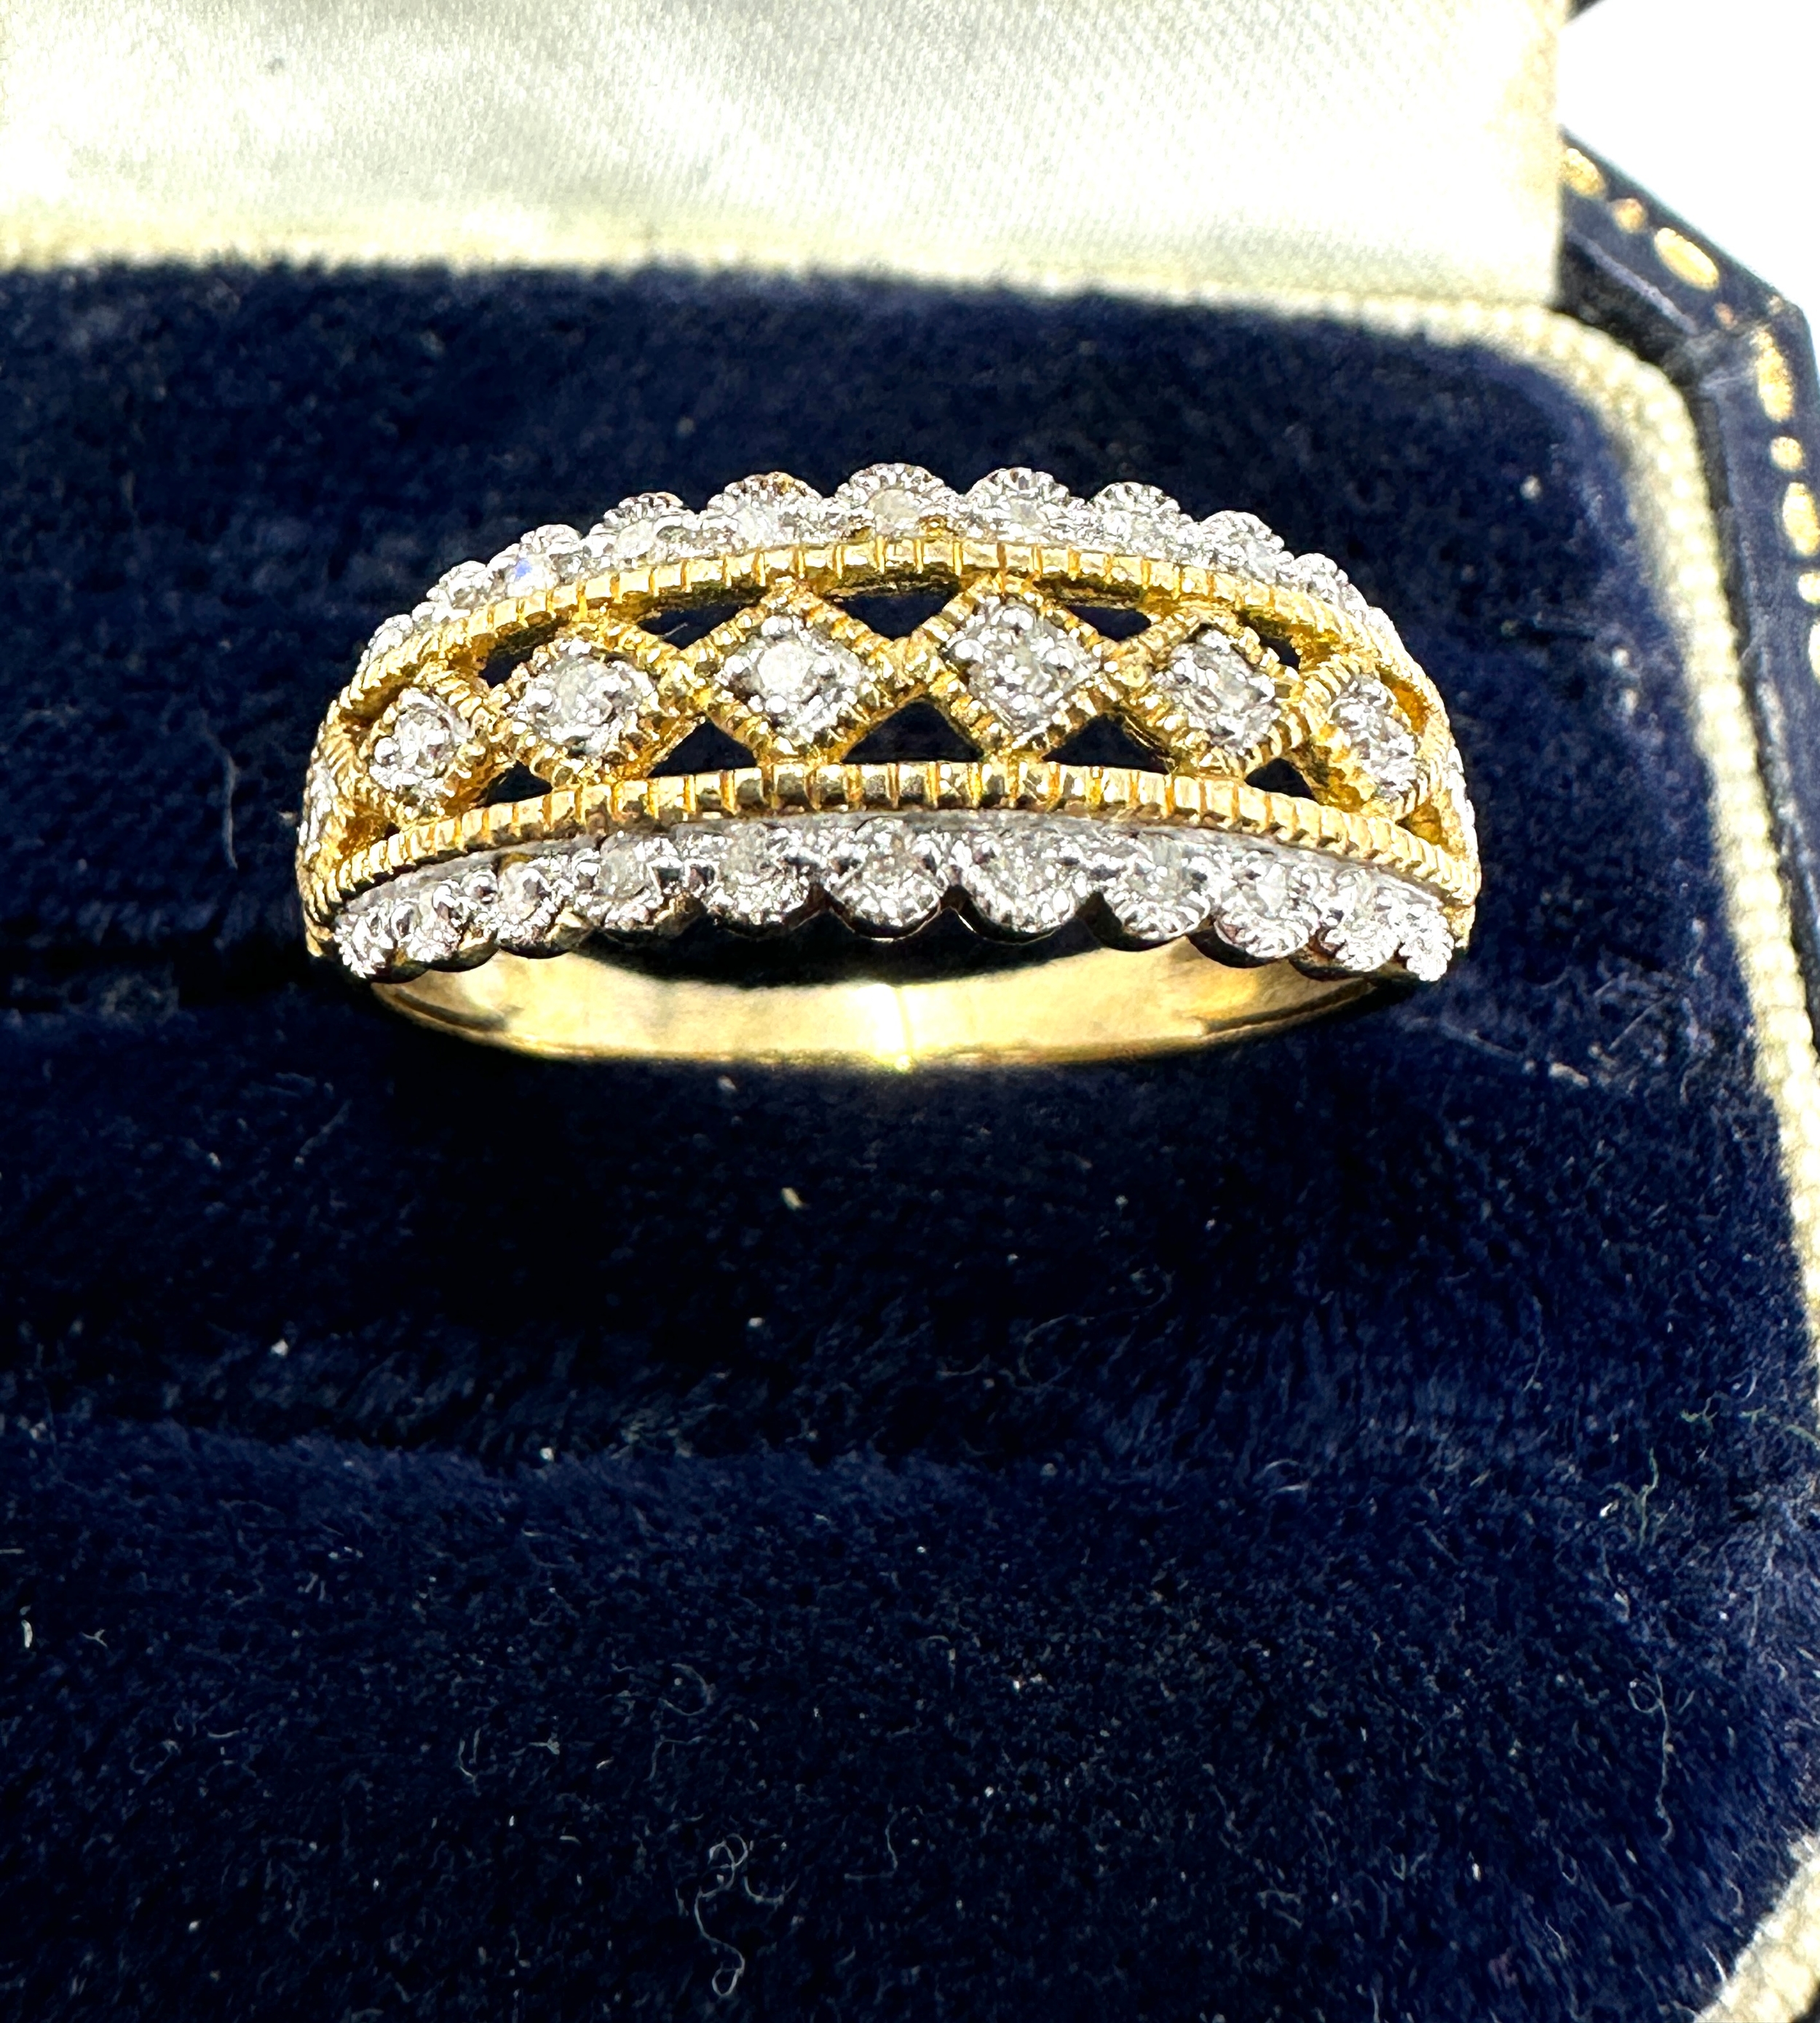 9ct gold diamond ring weight 2.2g